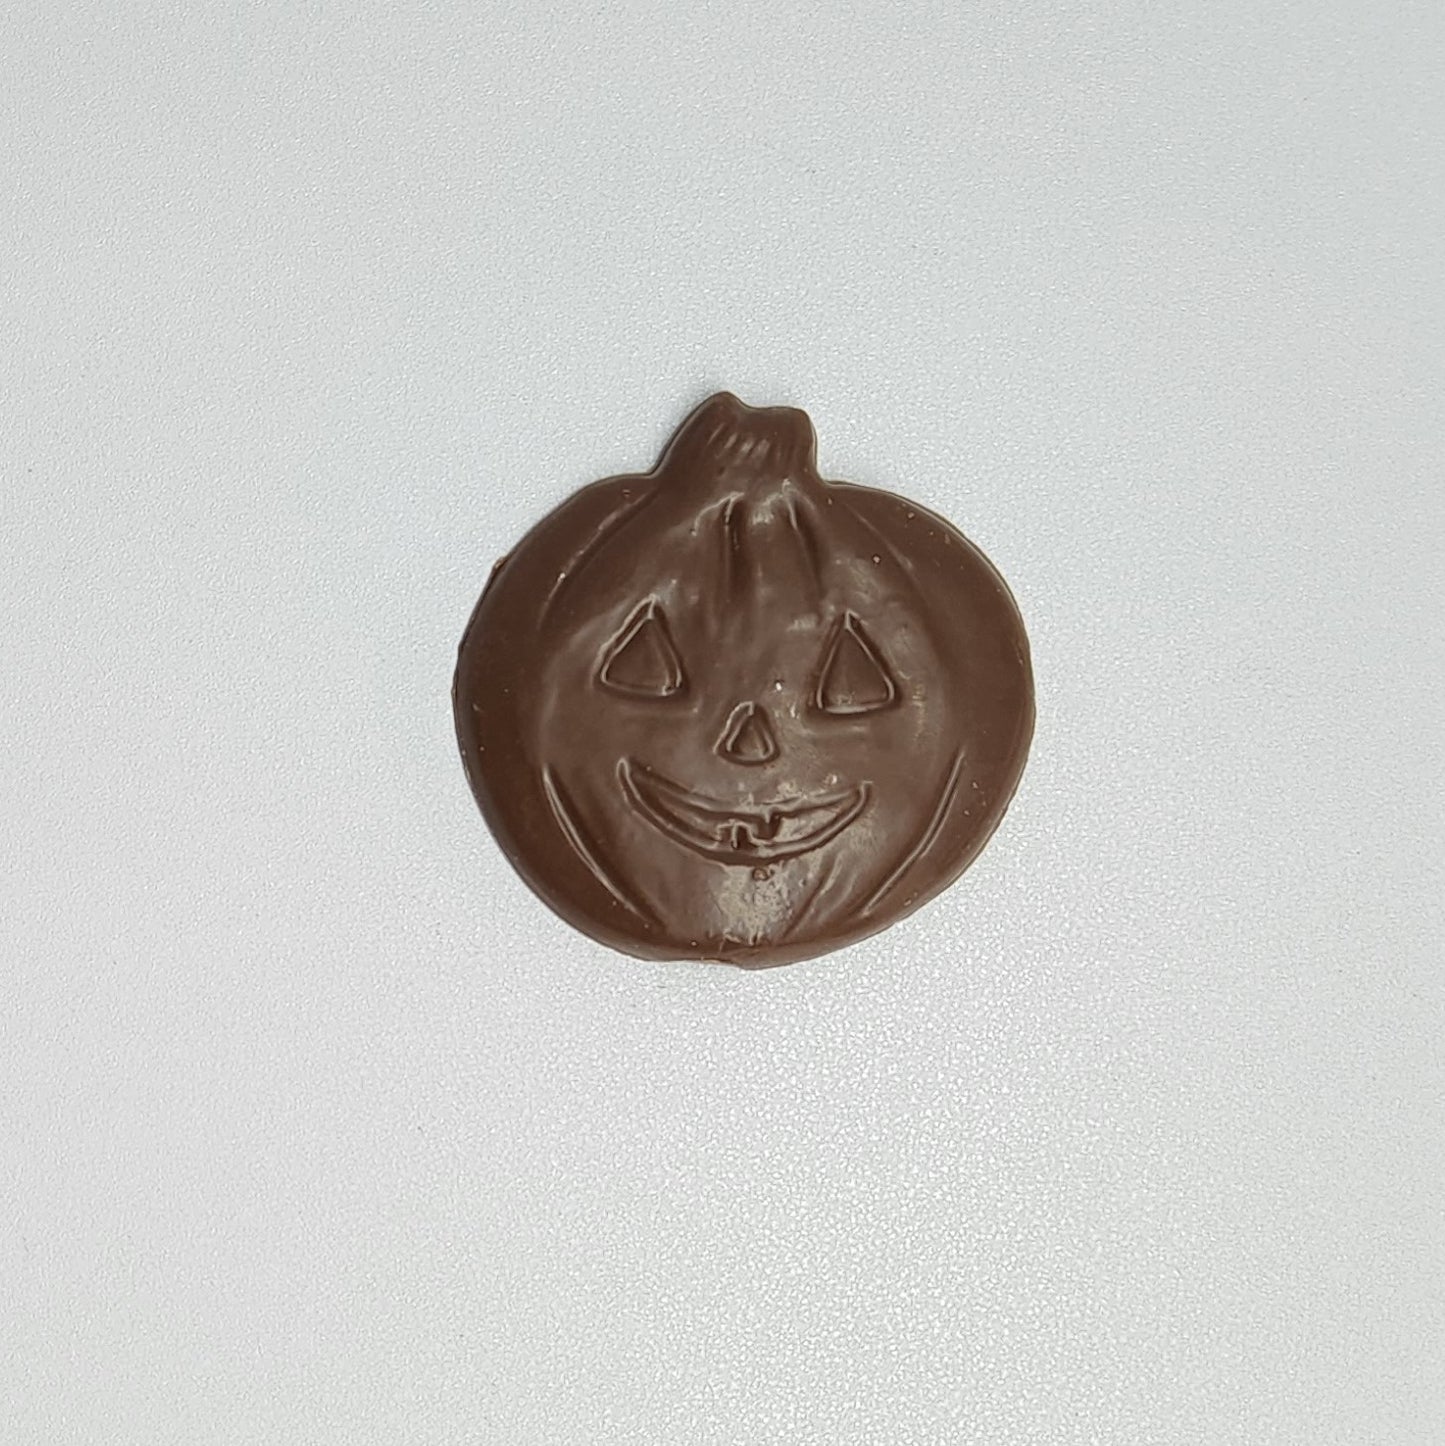 Chocolate Pumpkin